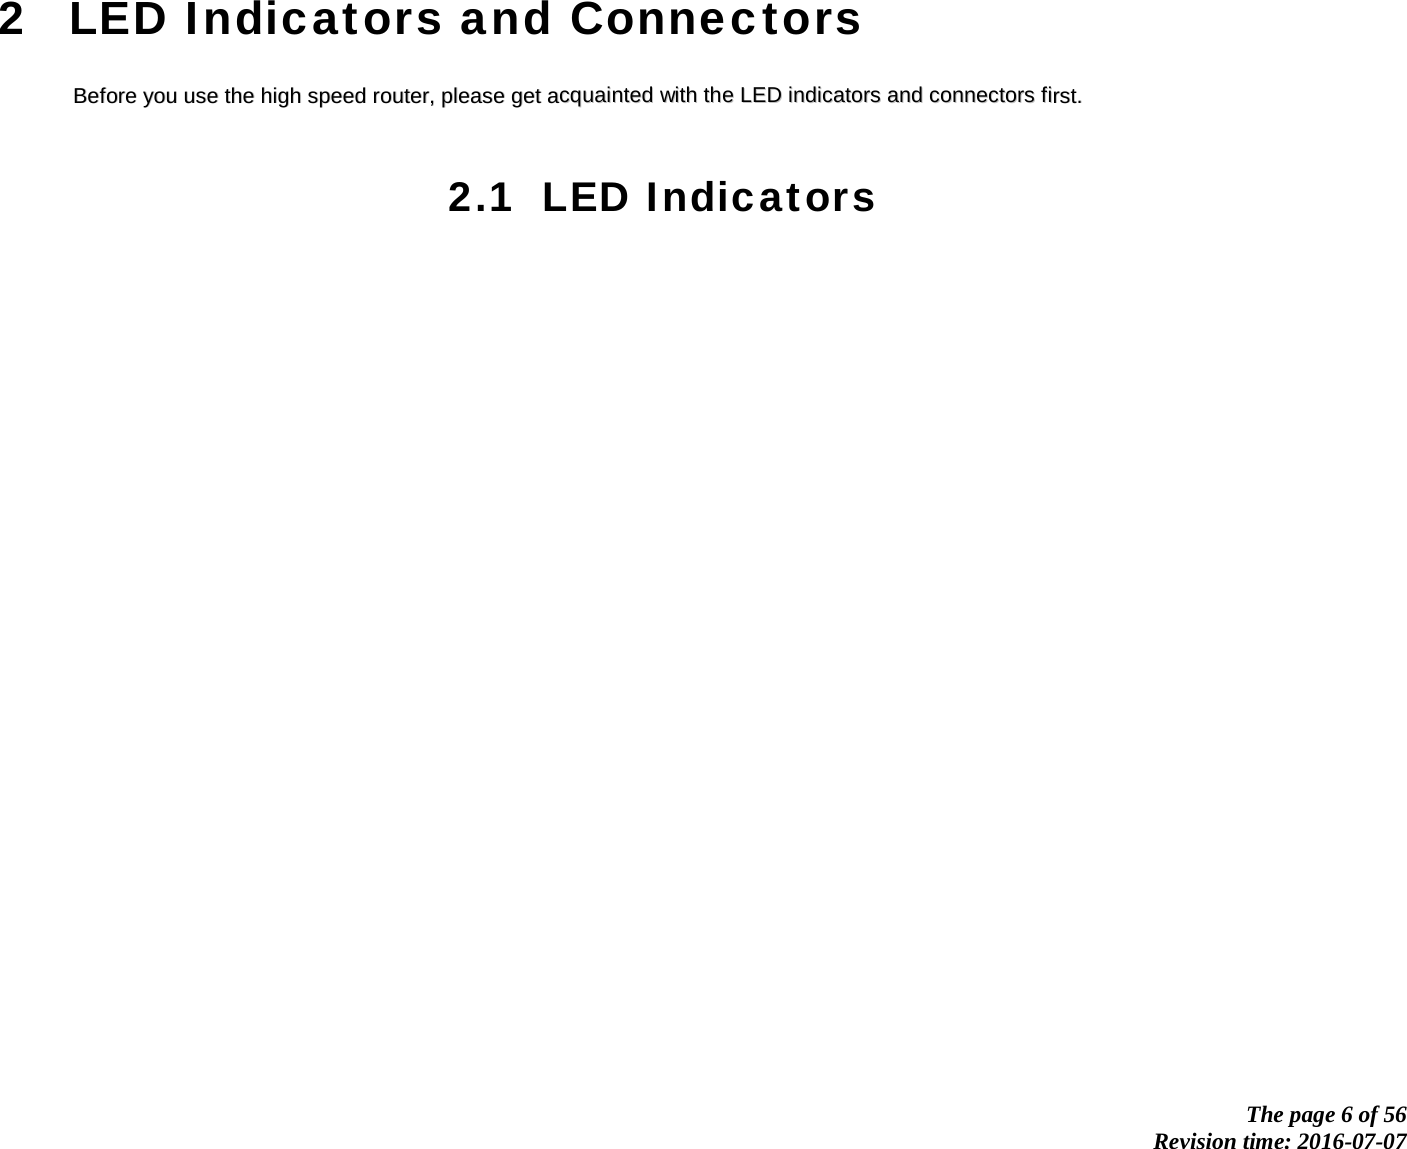            The page 6 of 56 Revision time: 2016-07-07       2 LED Indicators and Connectors BBeeffoorree  yyoouu  uussee  tthhee  hhiigghh  ssppeeeedd  rroouutteerr,,  pplleeaassee  ggeett  aaccqquuaaiinntteedd  wwiitthh  tthhee  LLEEDD  iinnddiiccaattoorrss  aanndd  ccoonnnneeccttoorrss  ffiirrsstt..    2.1 LED Indicators    